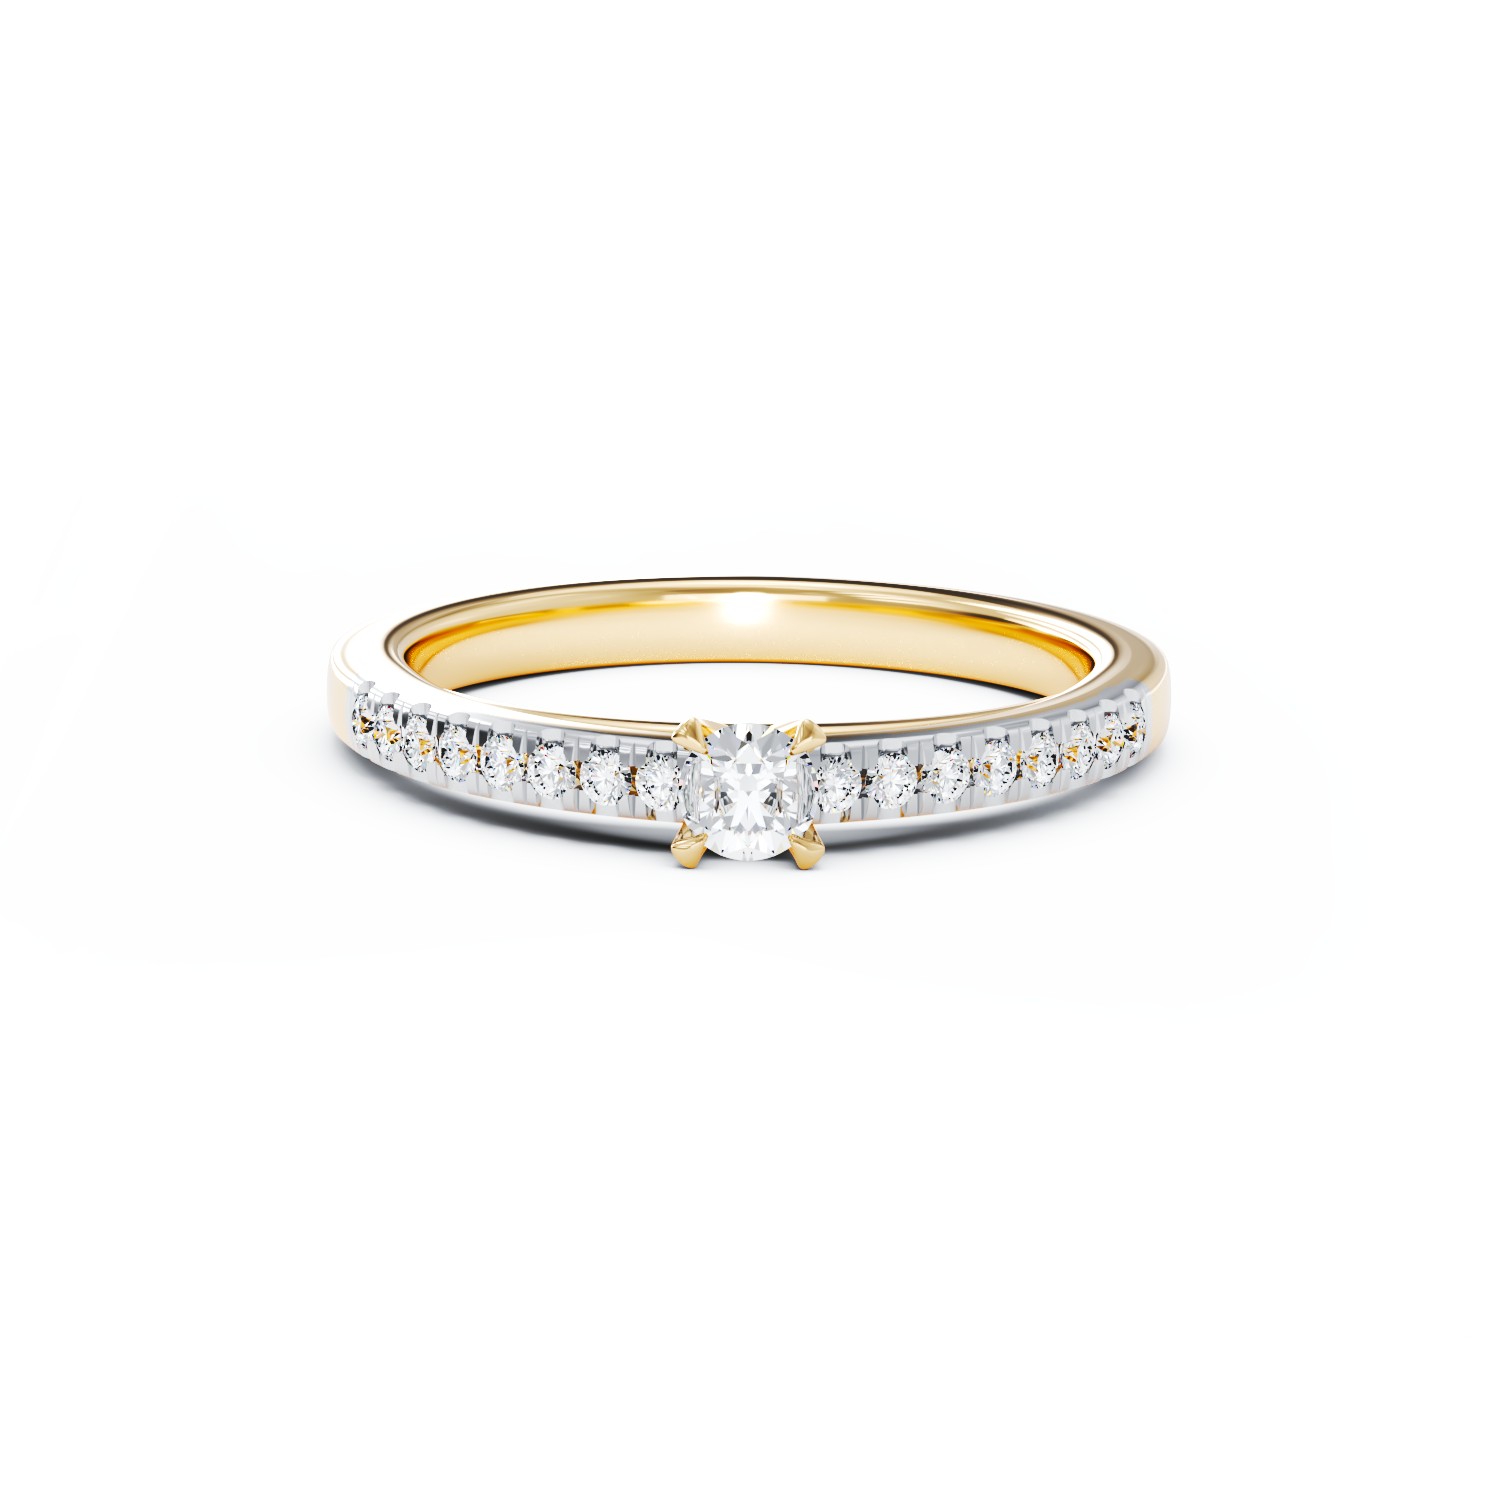 Inel de logodna din aur galben de 18K cu diamant de 0.112ct si diamante de 0.148ct